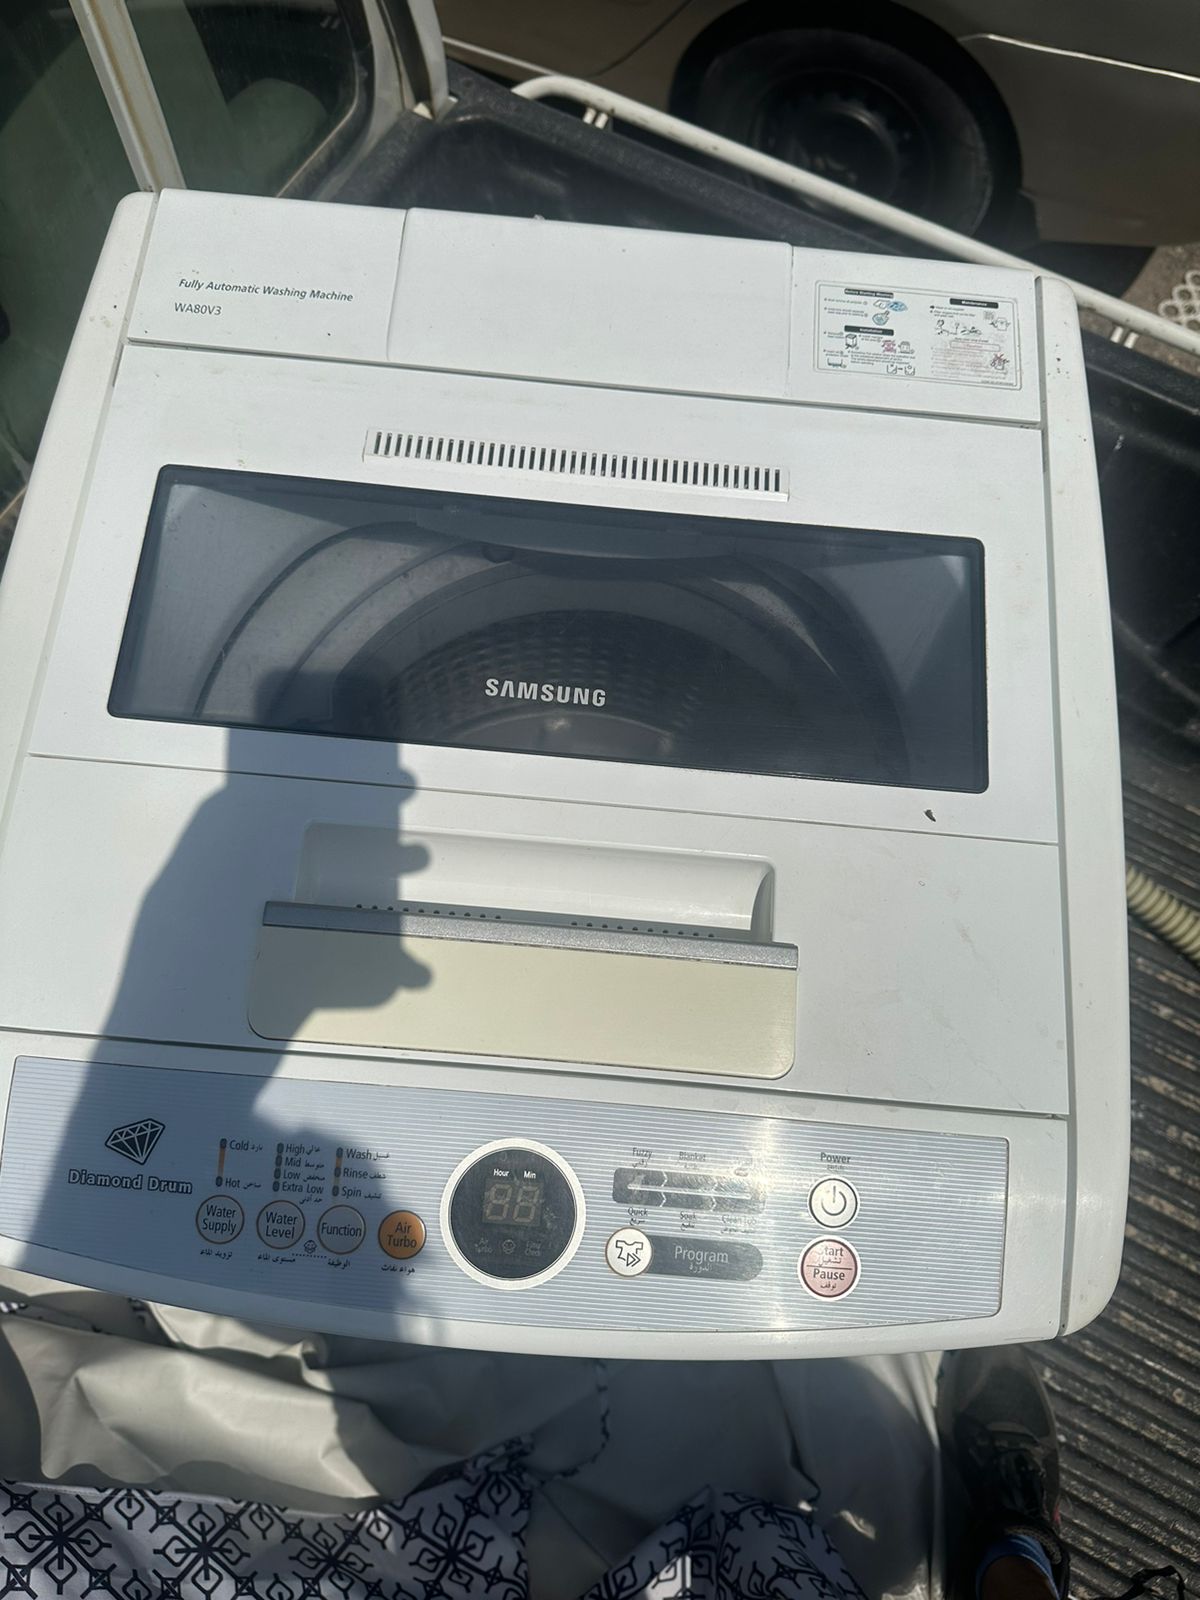 Washing machine for sale 